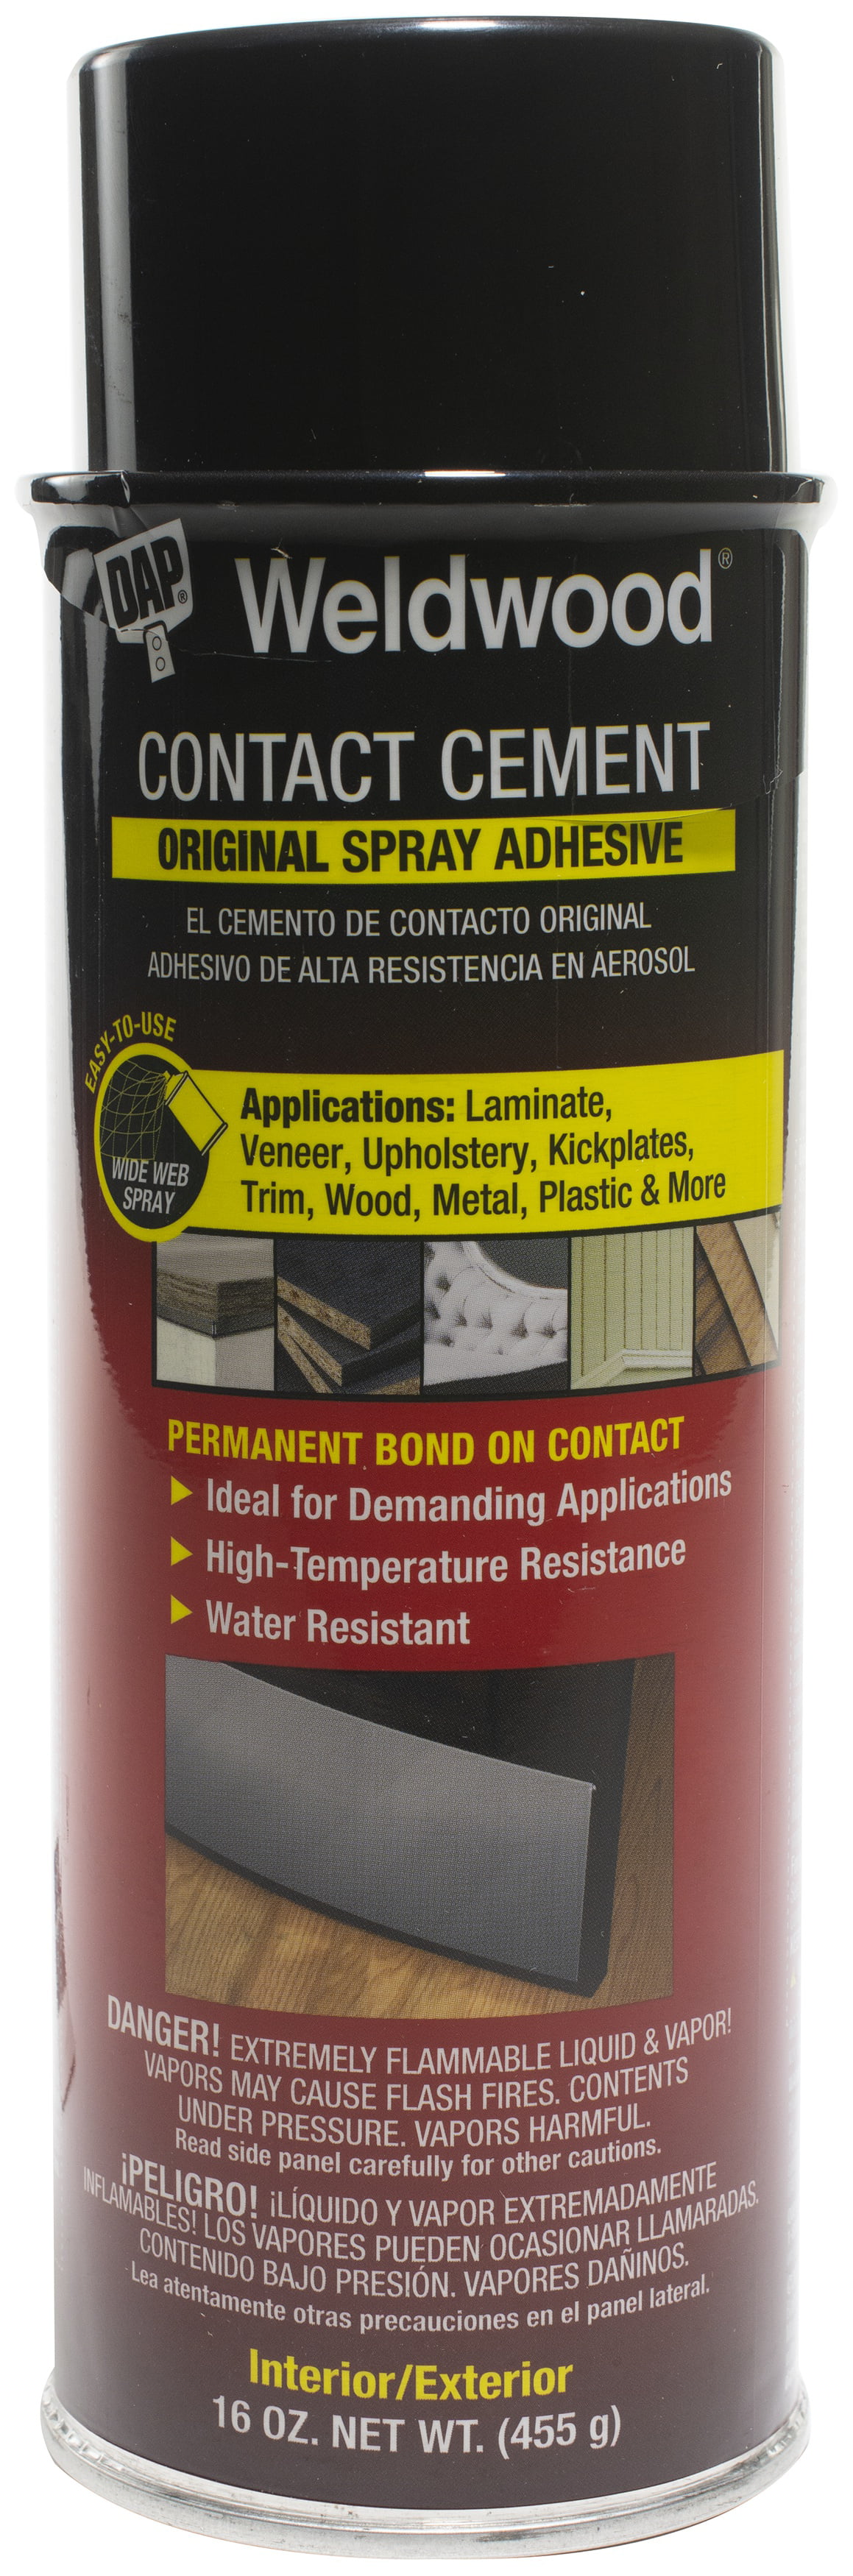 Weldwood Contact Cement Spray